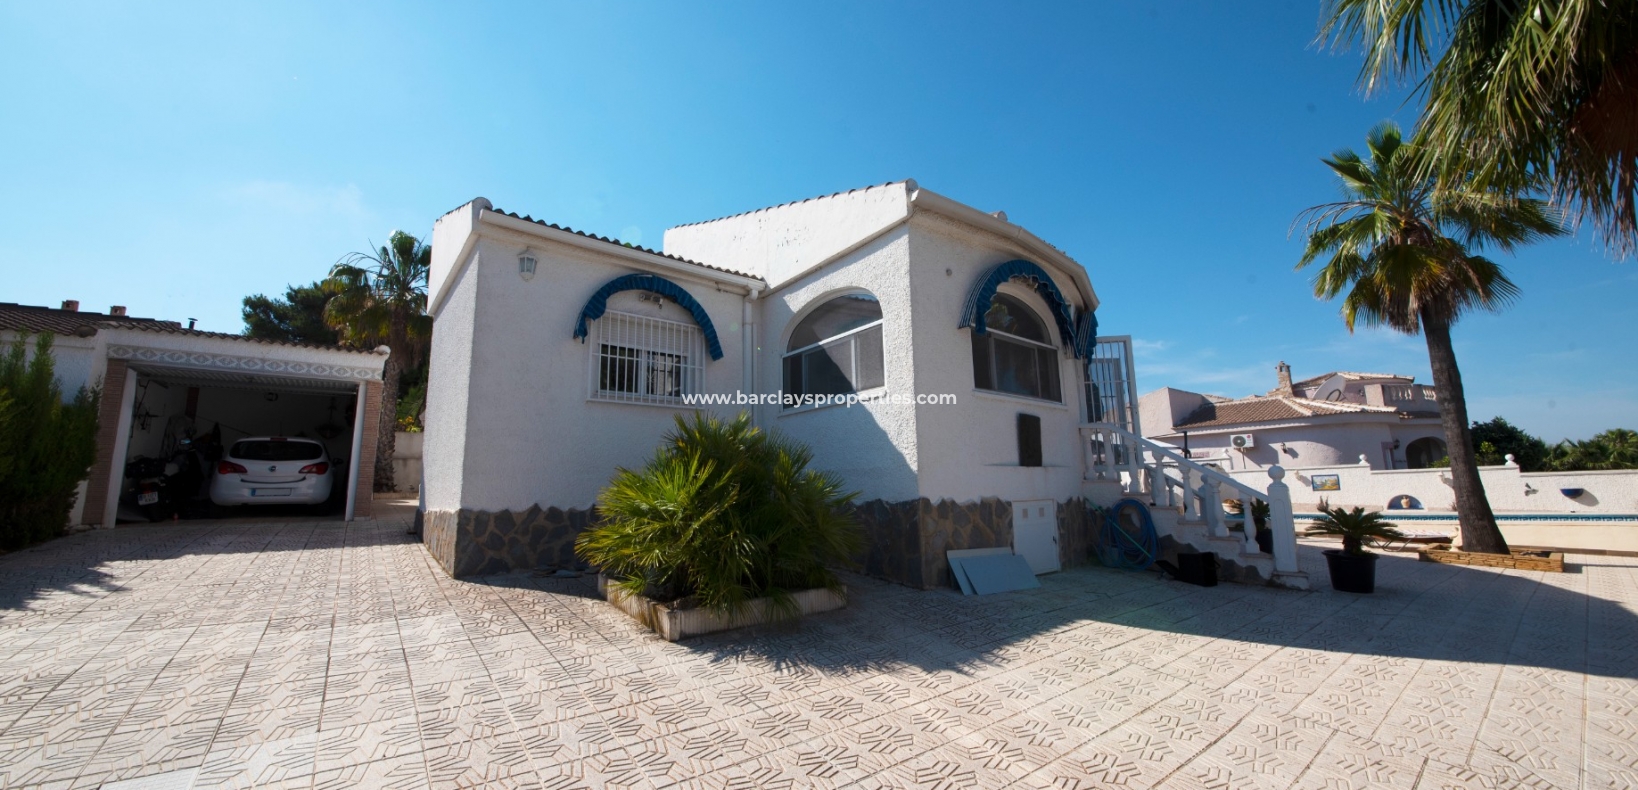 Haus - Prestige Villa zum Verkauf in Urbanisation La Escuera, Alicante